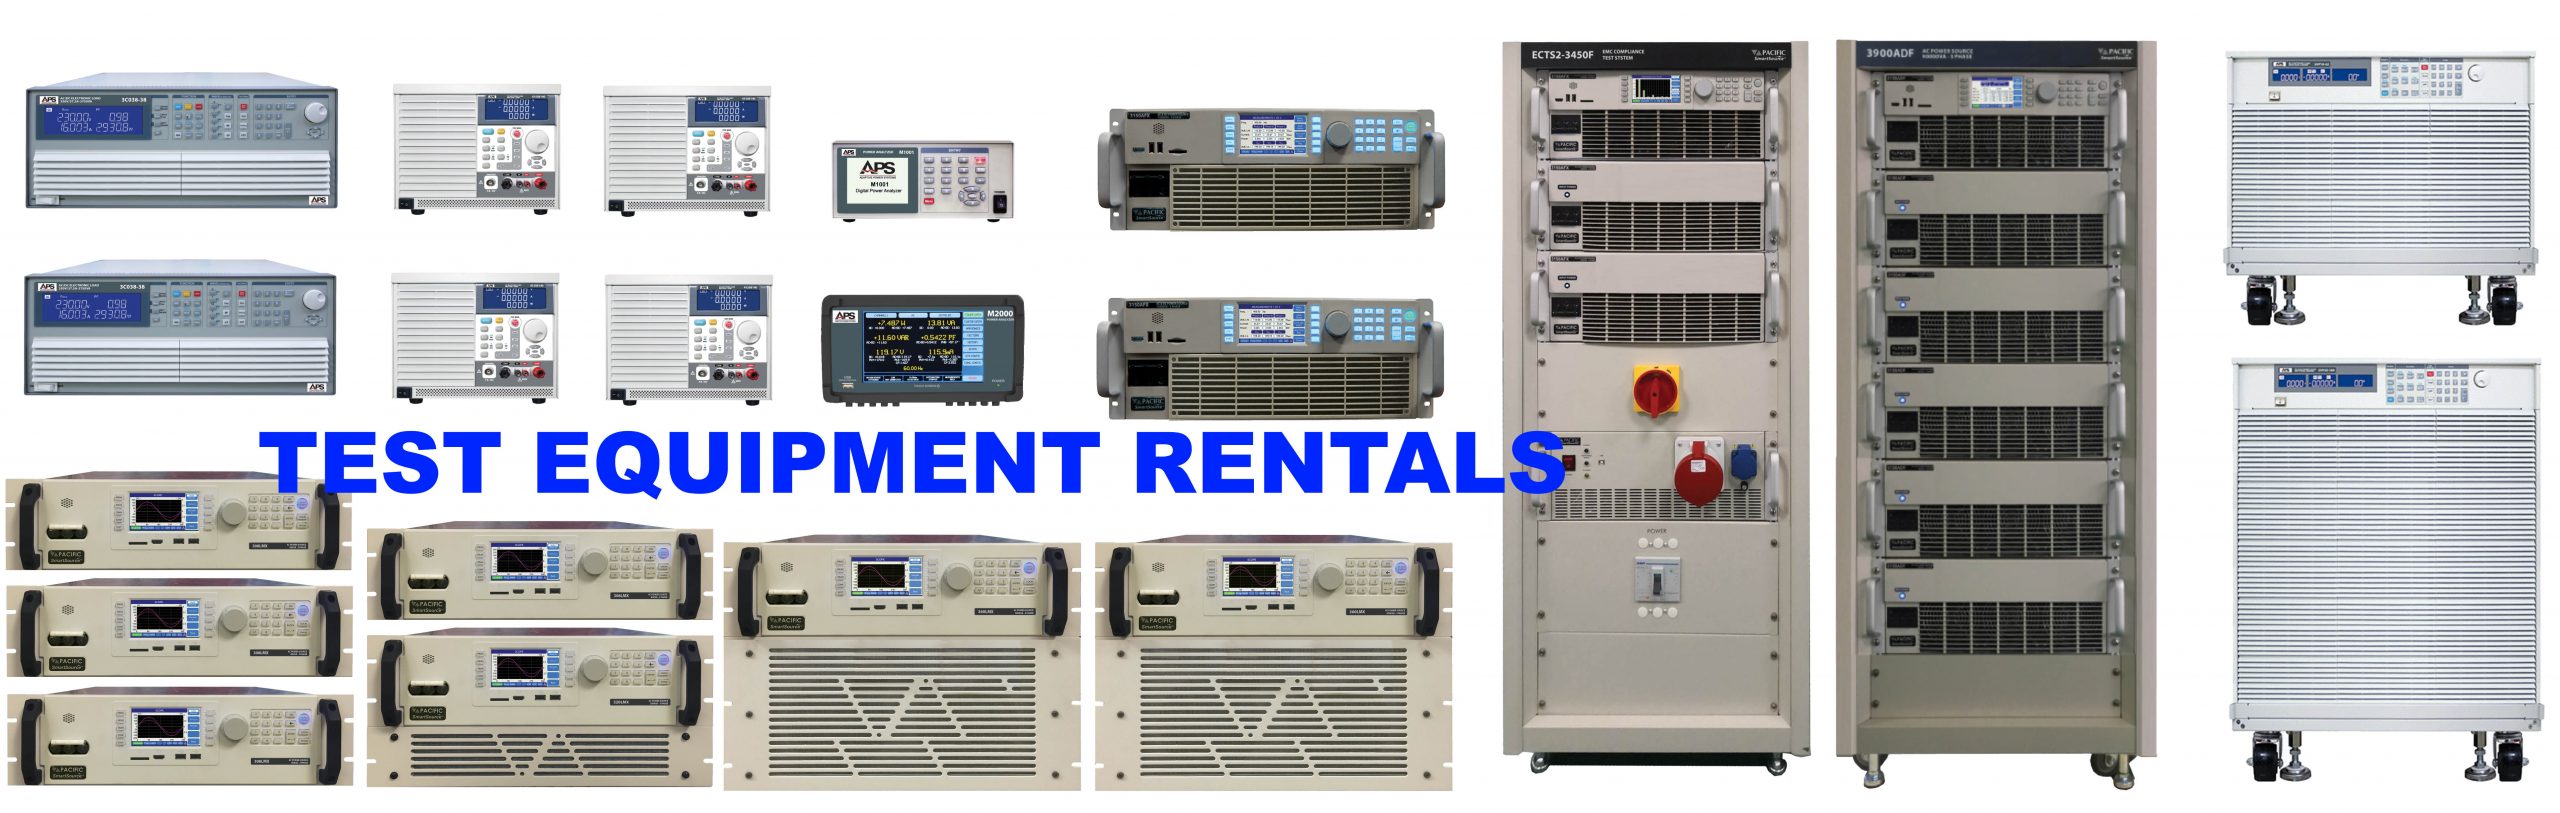 Test Equipment Rentals